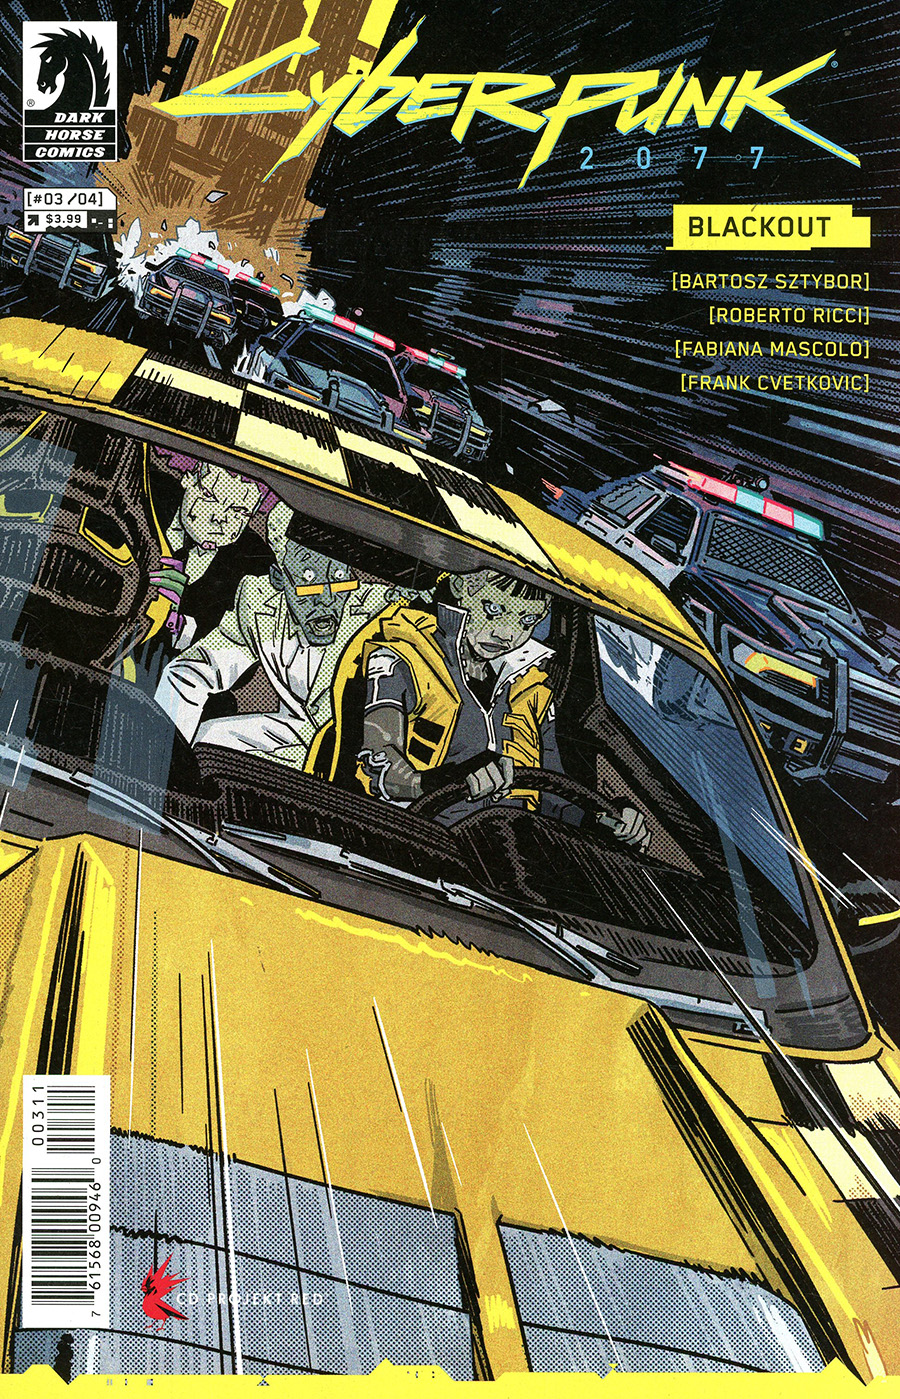 Cyberpunk 2077 Blackout #3 Cover A Regular Roberto Ricci Cover